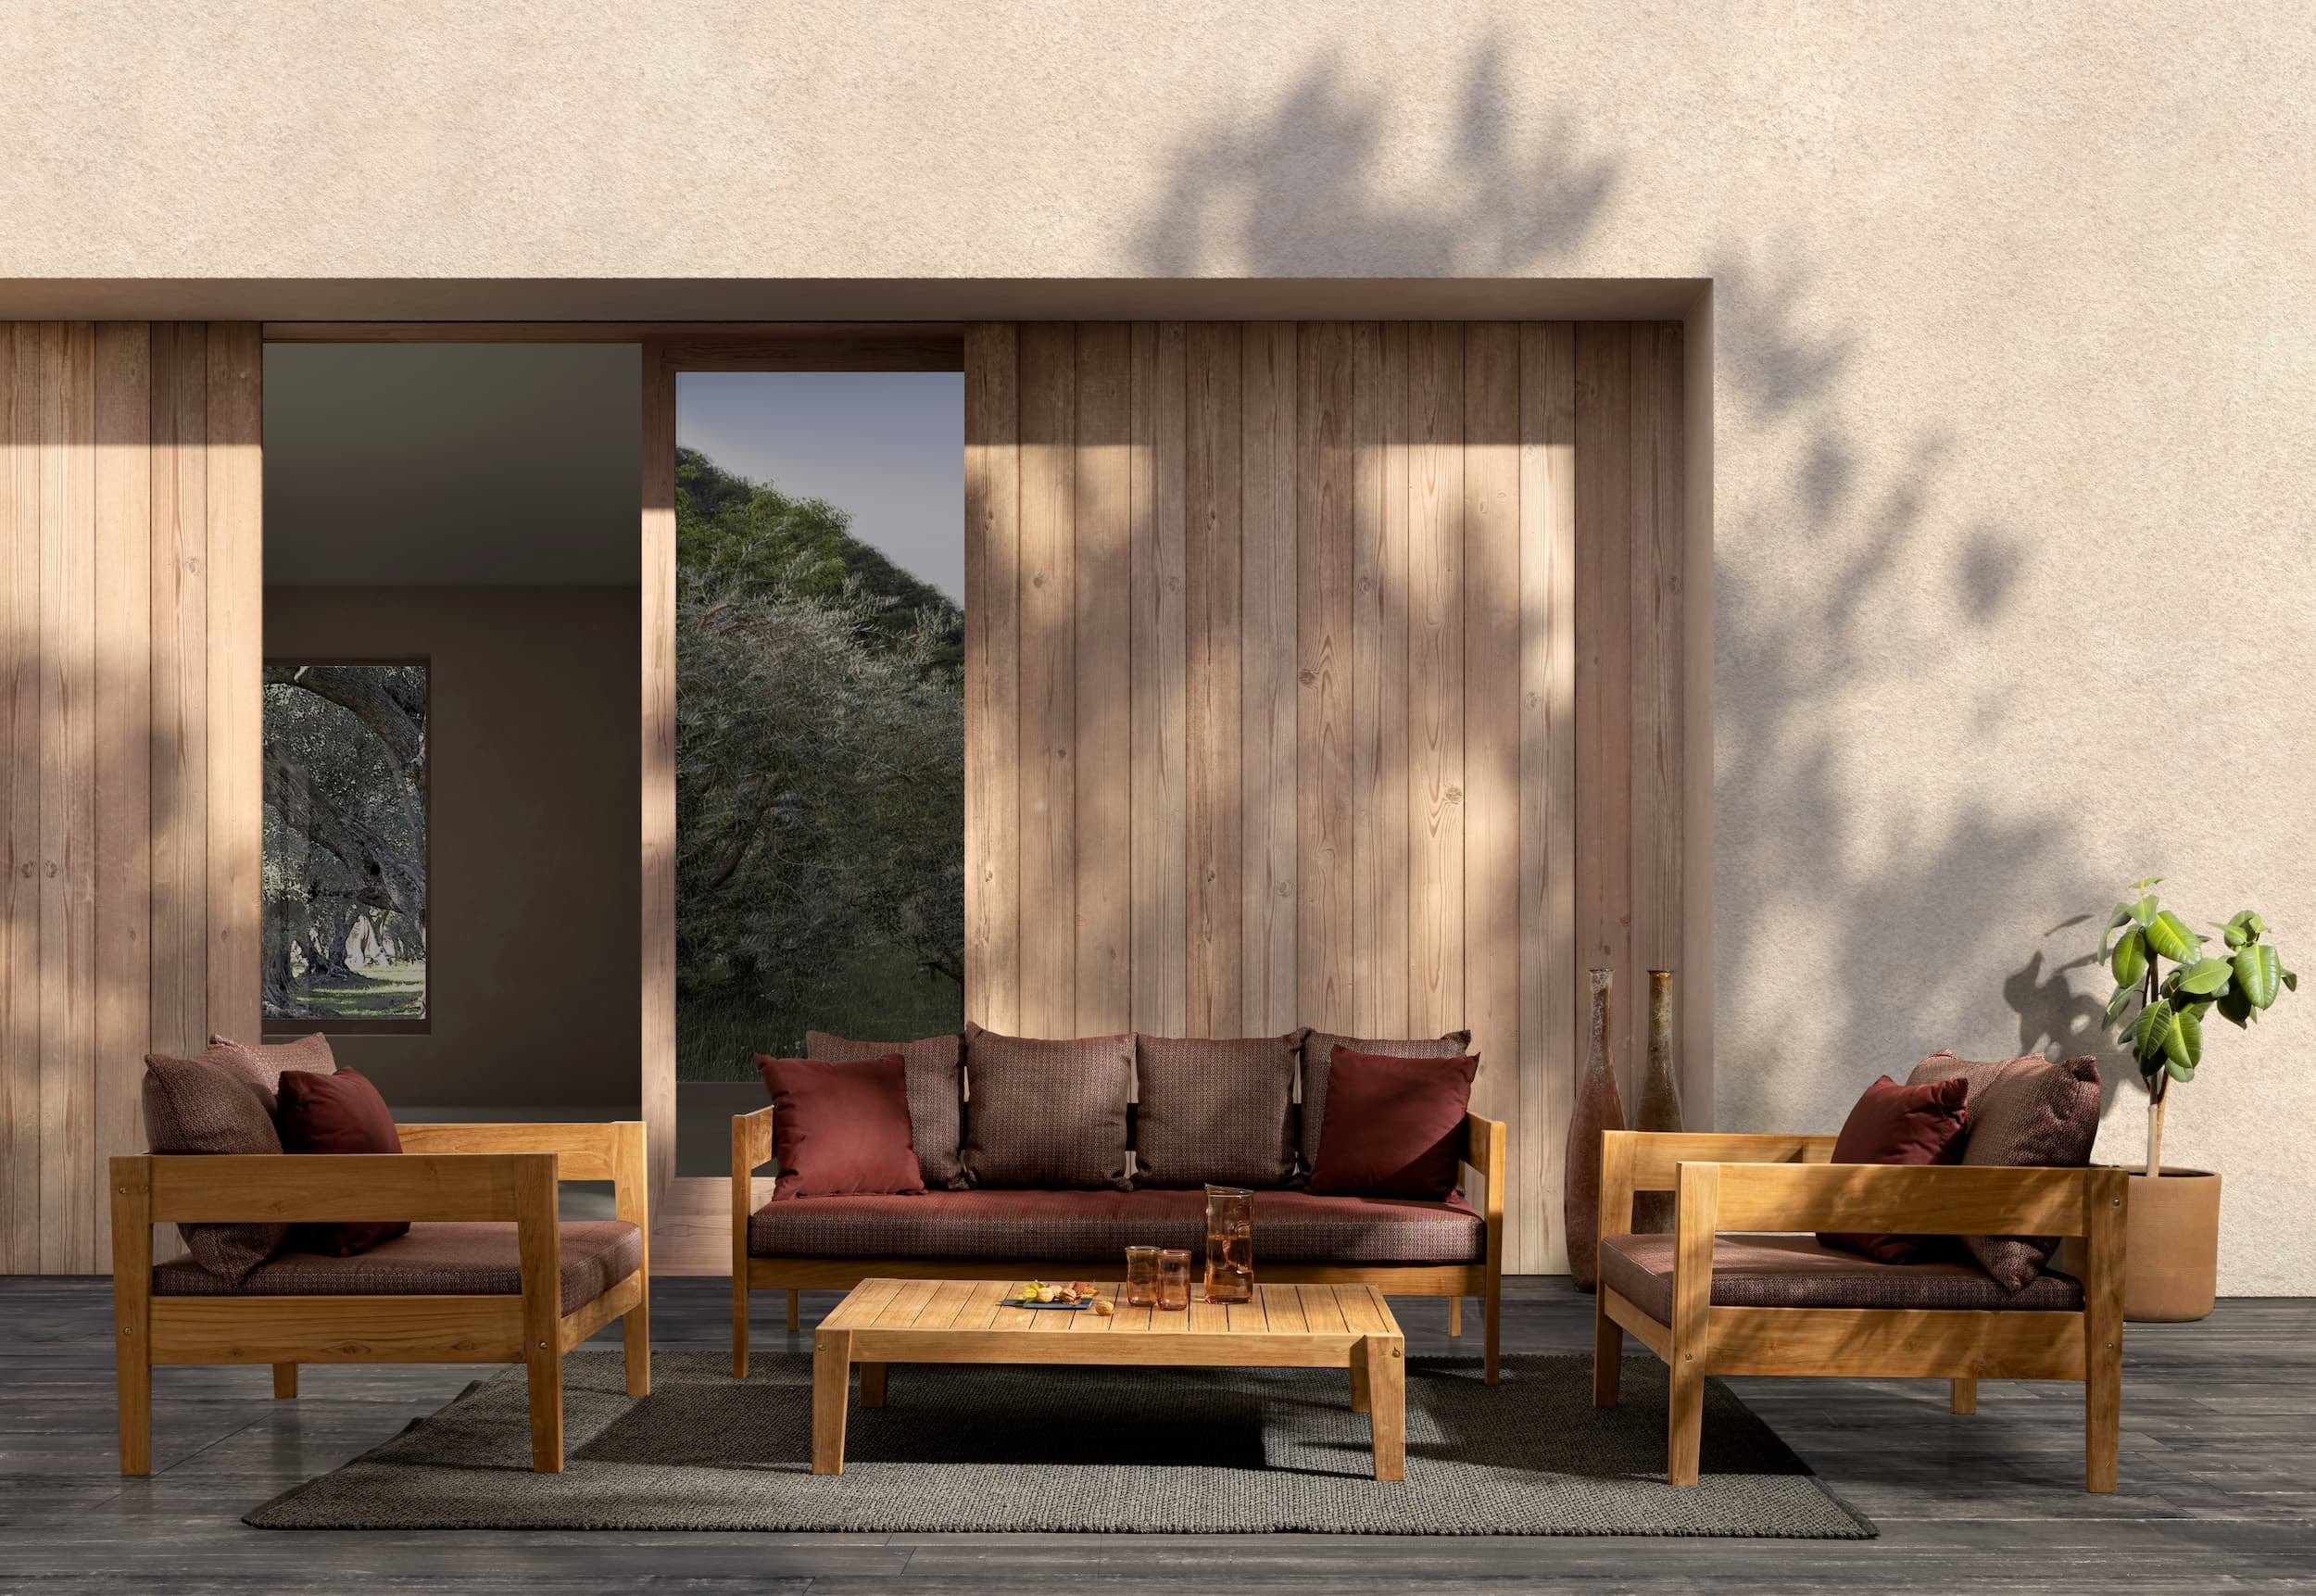 Bizzotto Canapea fixa pentru gradina / terasa, din lemn de tec, cu perne detasabile, 3 locuri, Kobo Burgundy / Natural, l190xA90xH79 cm